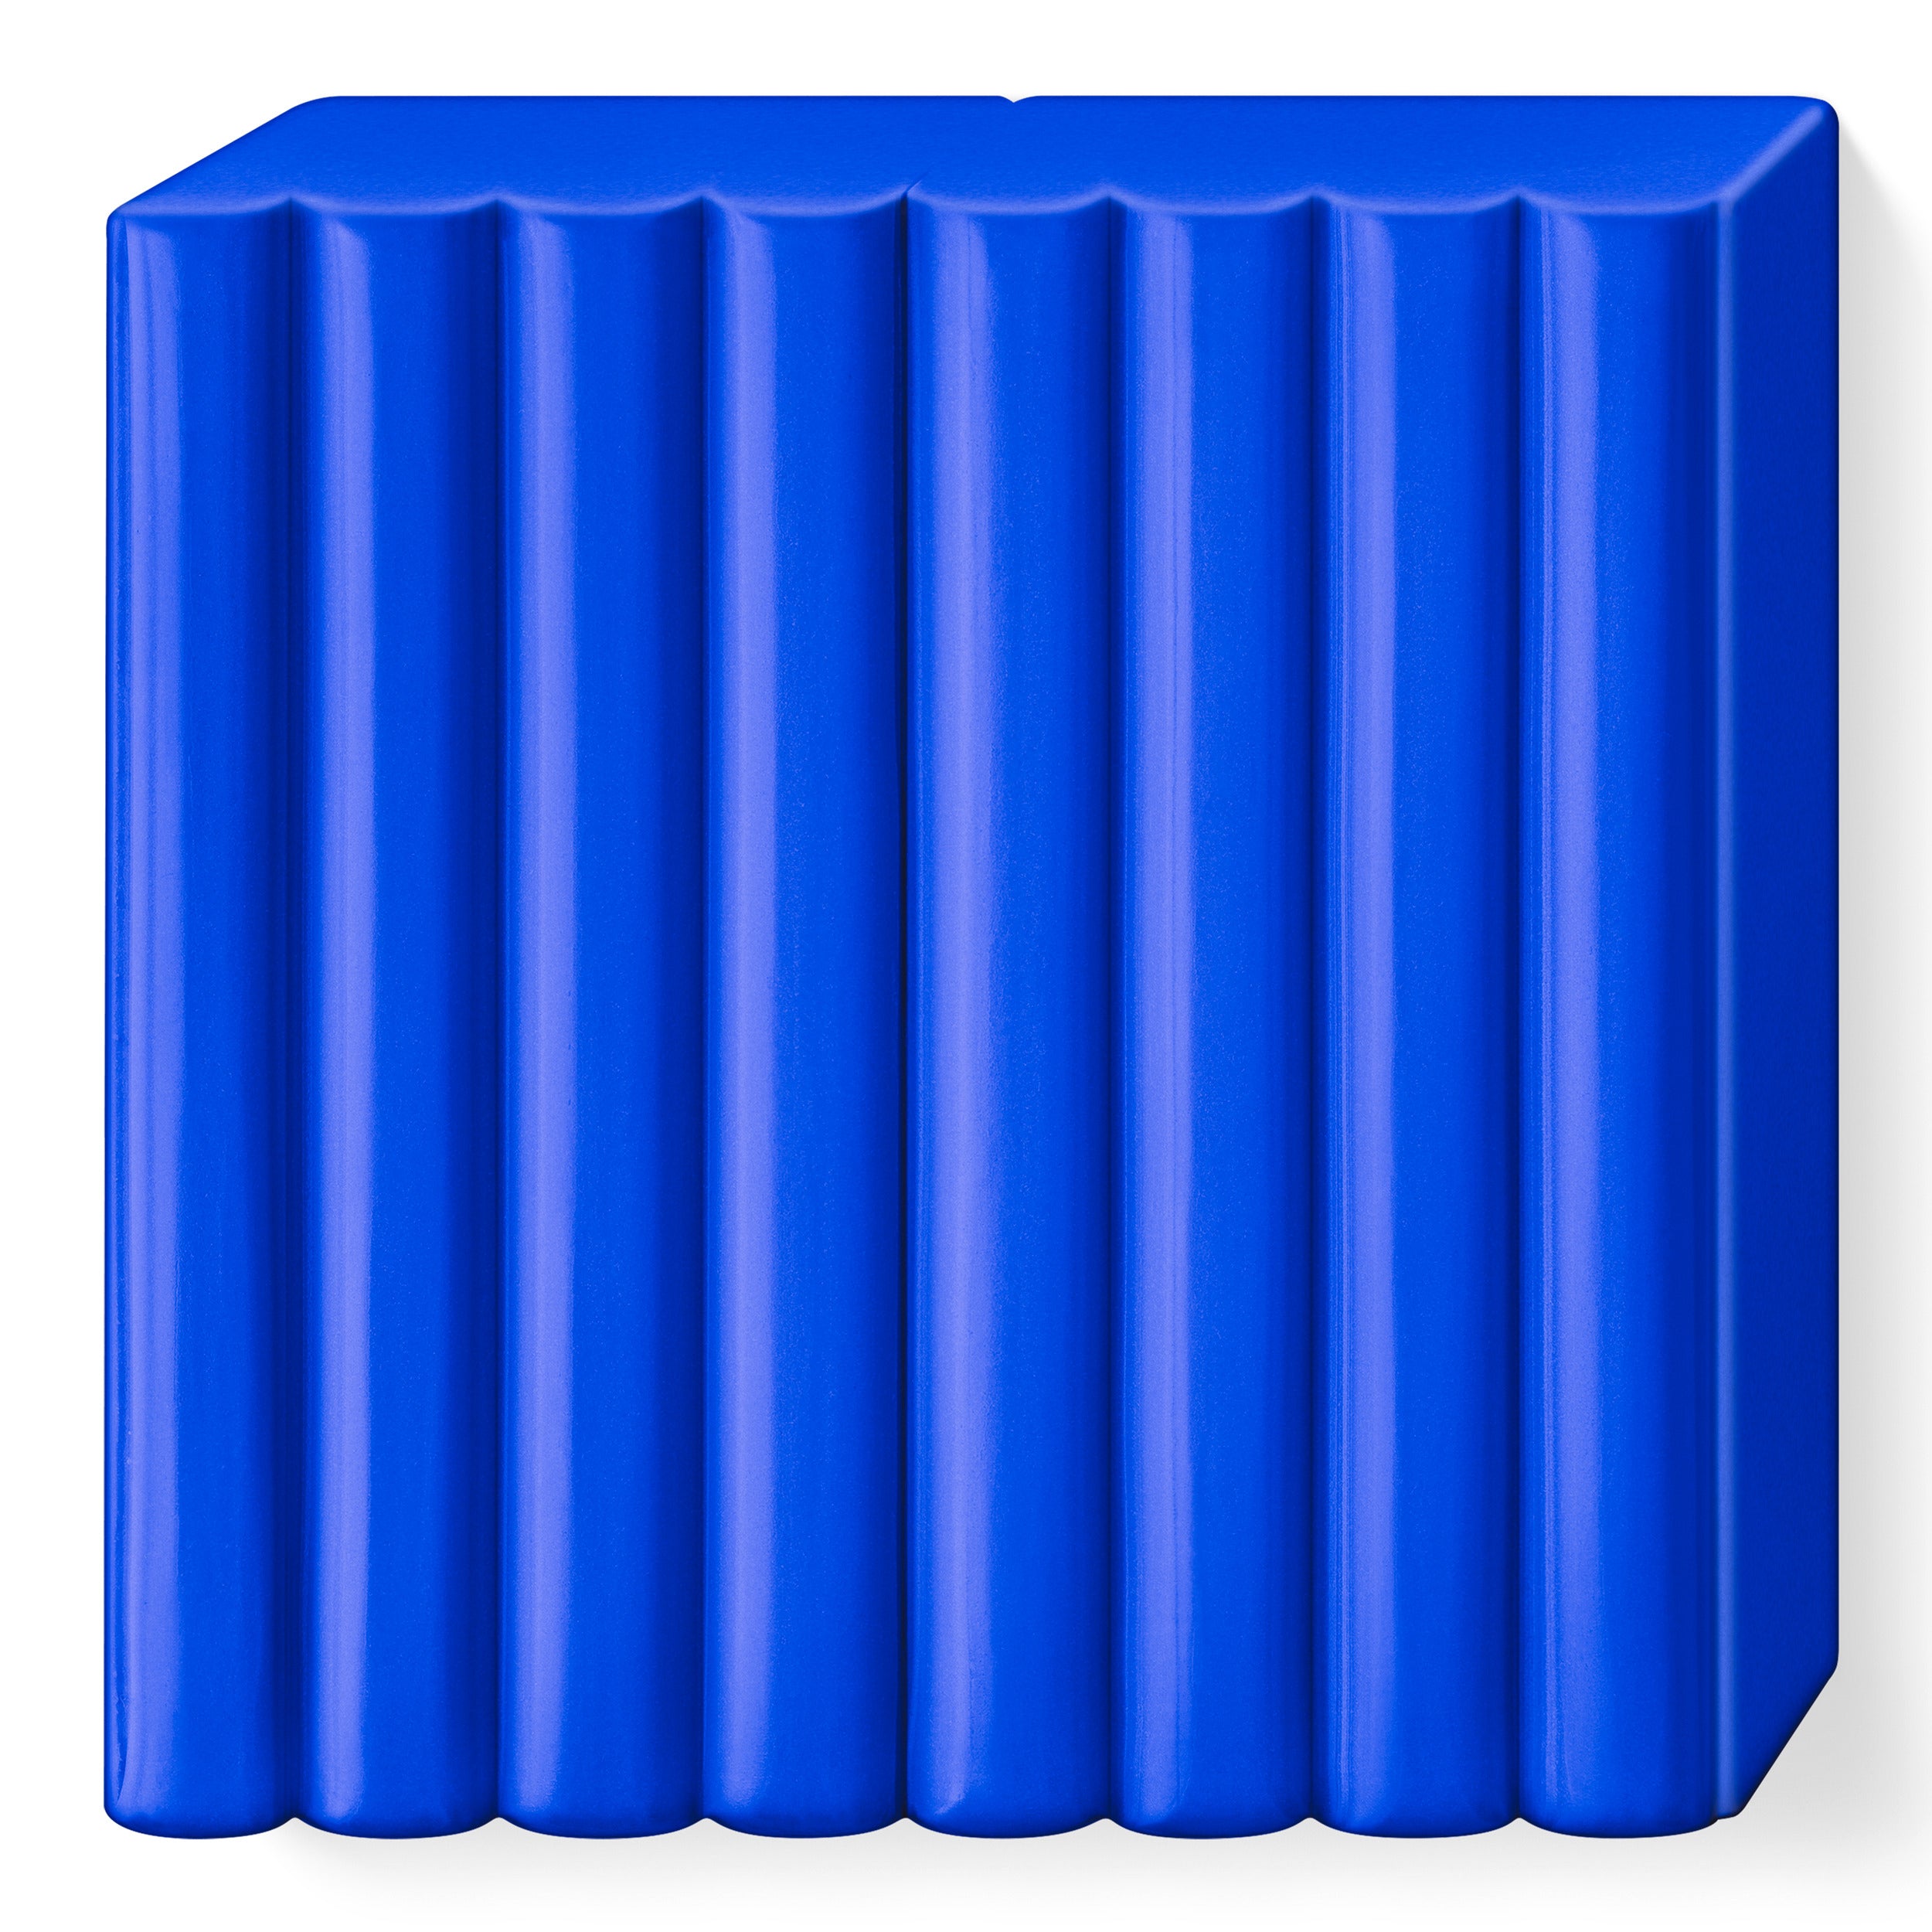 Fimo Soft Polymer Clay Standard Block 57g (2oz) - Brilliant Blue